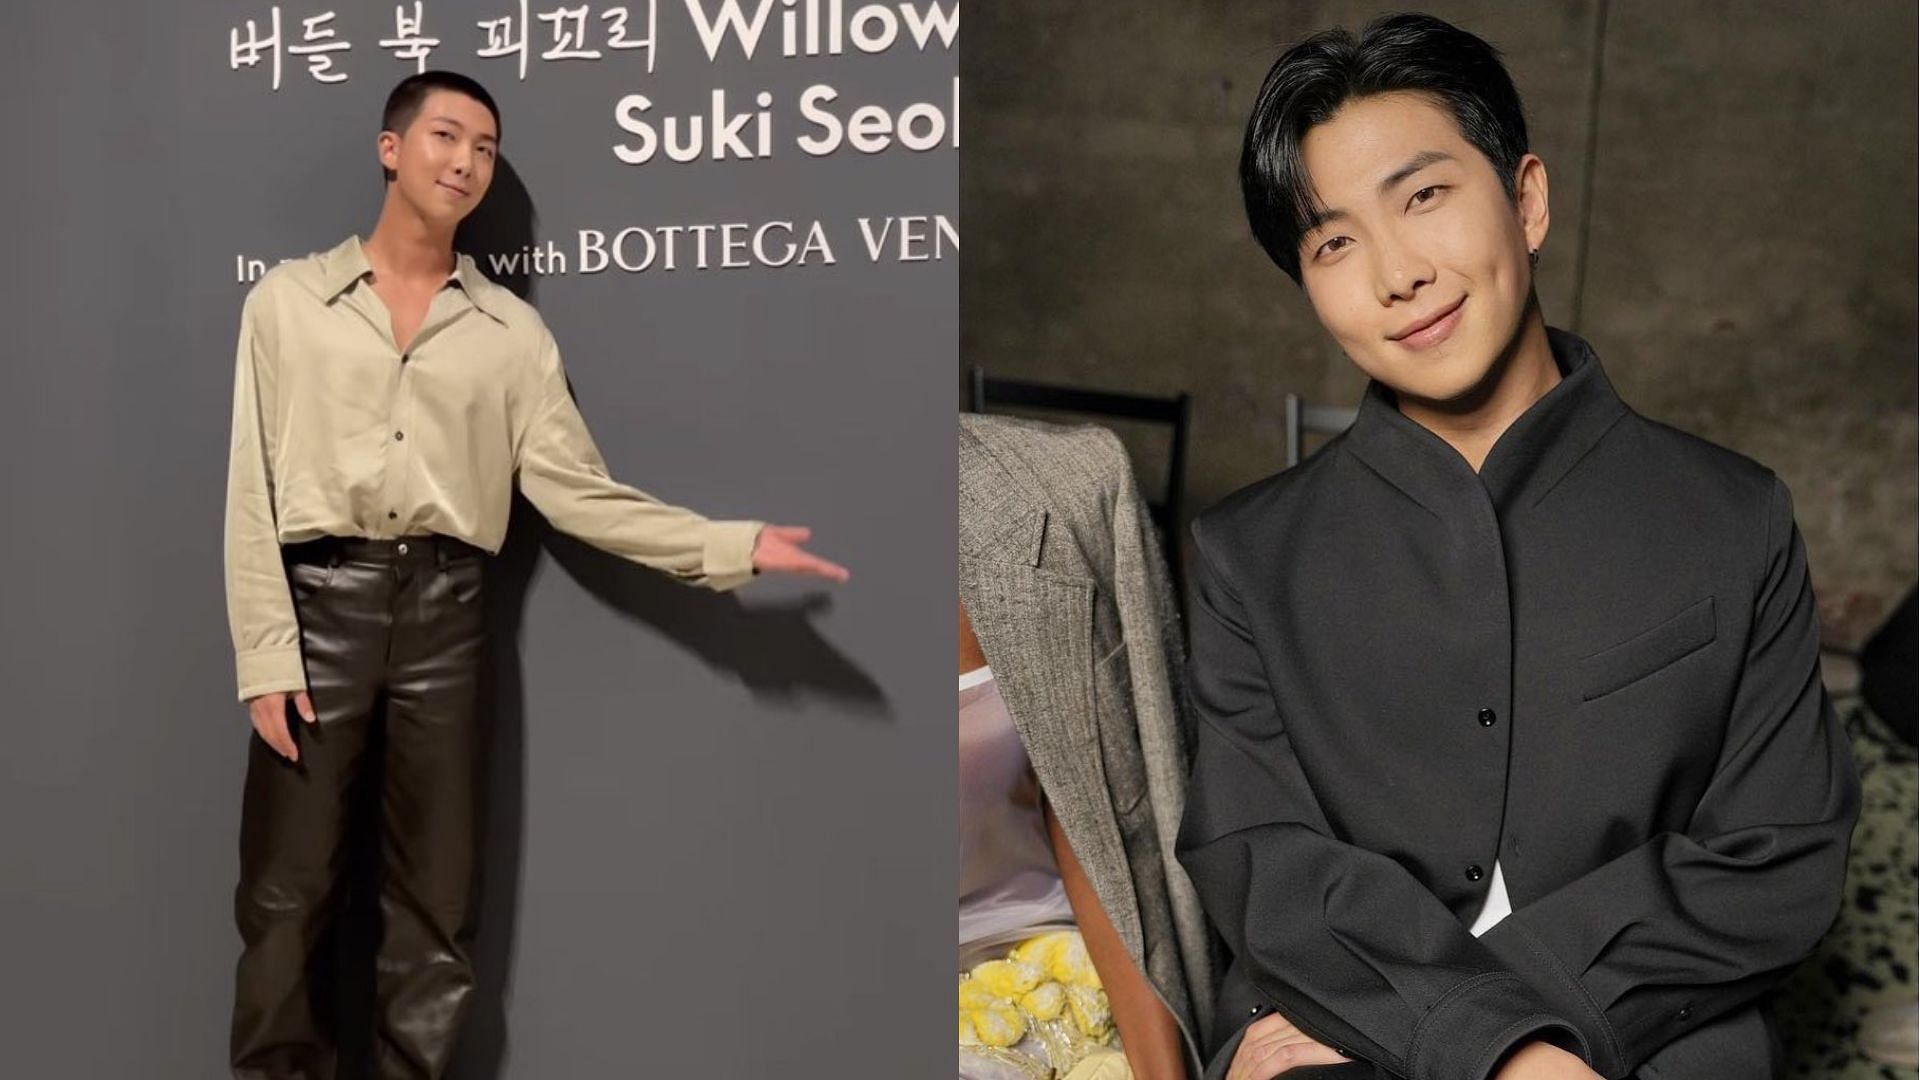 RM (BTS) has been announced as Bottega Veneta's latest ambassador : r/kpop